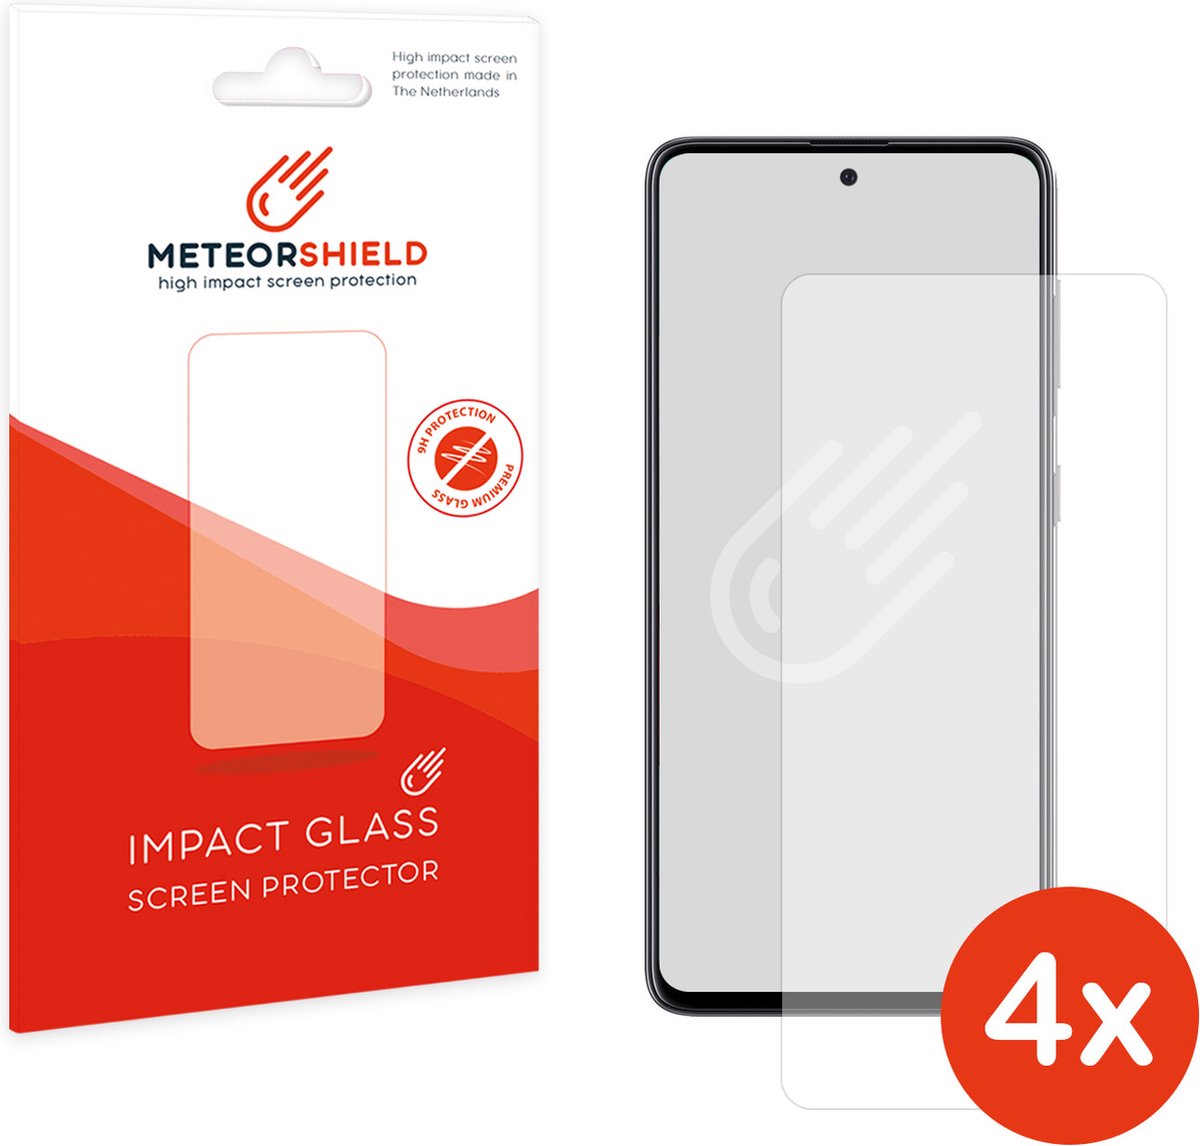 4 stuks: Meteorshield Samsung Galaxy S20 FE screenprotector - Ultra clear impact glass